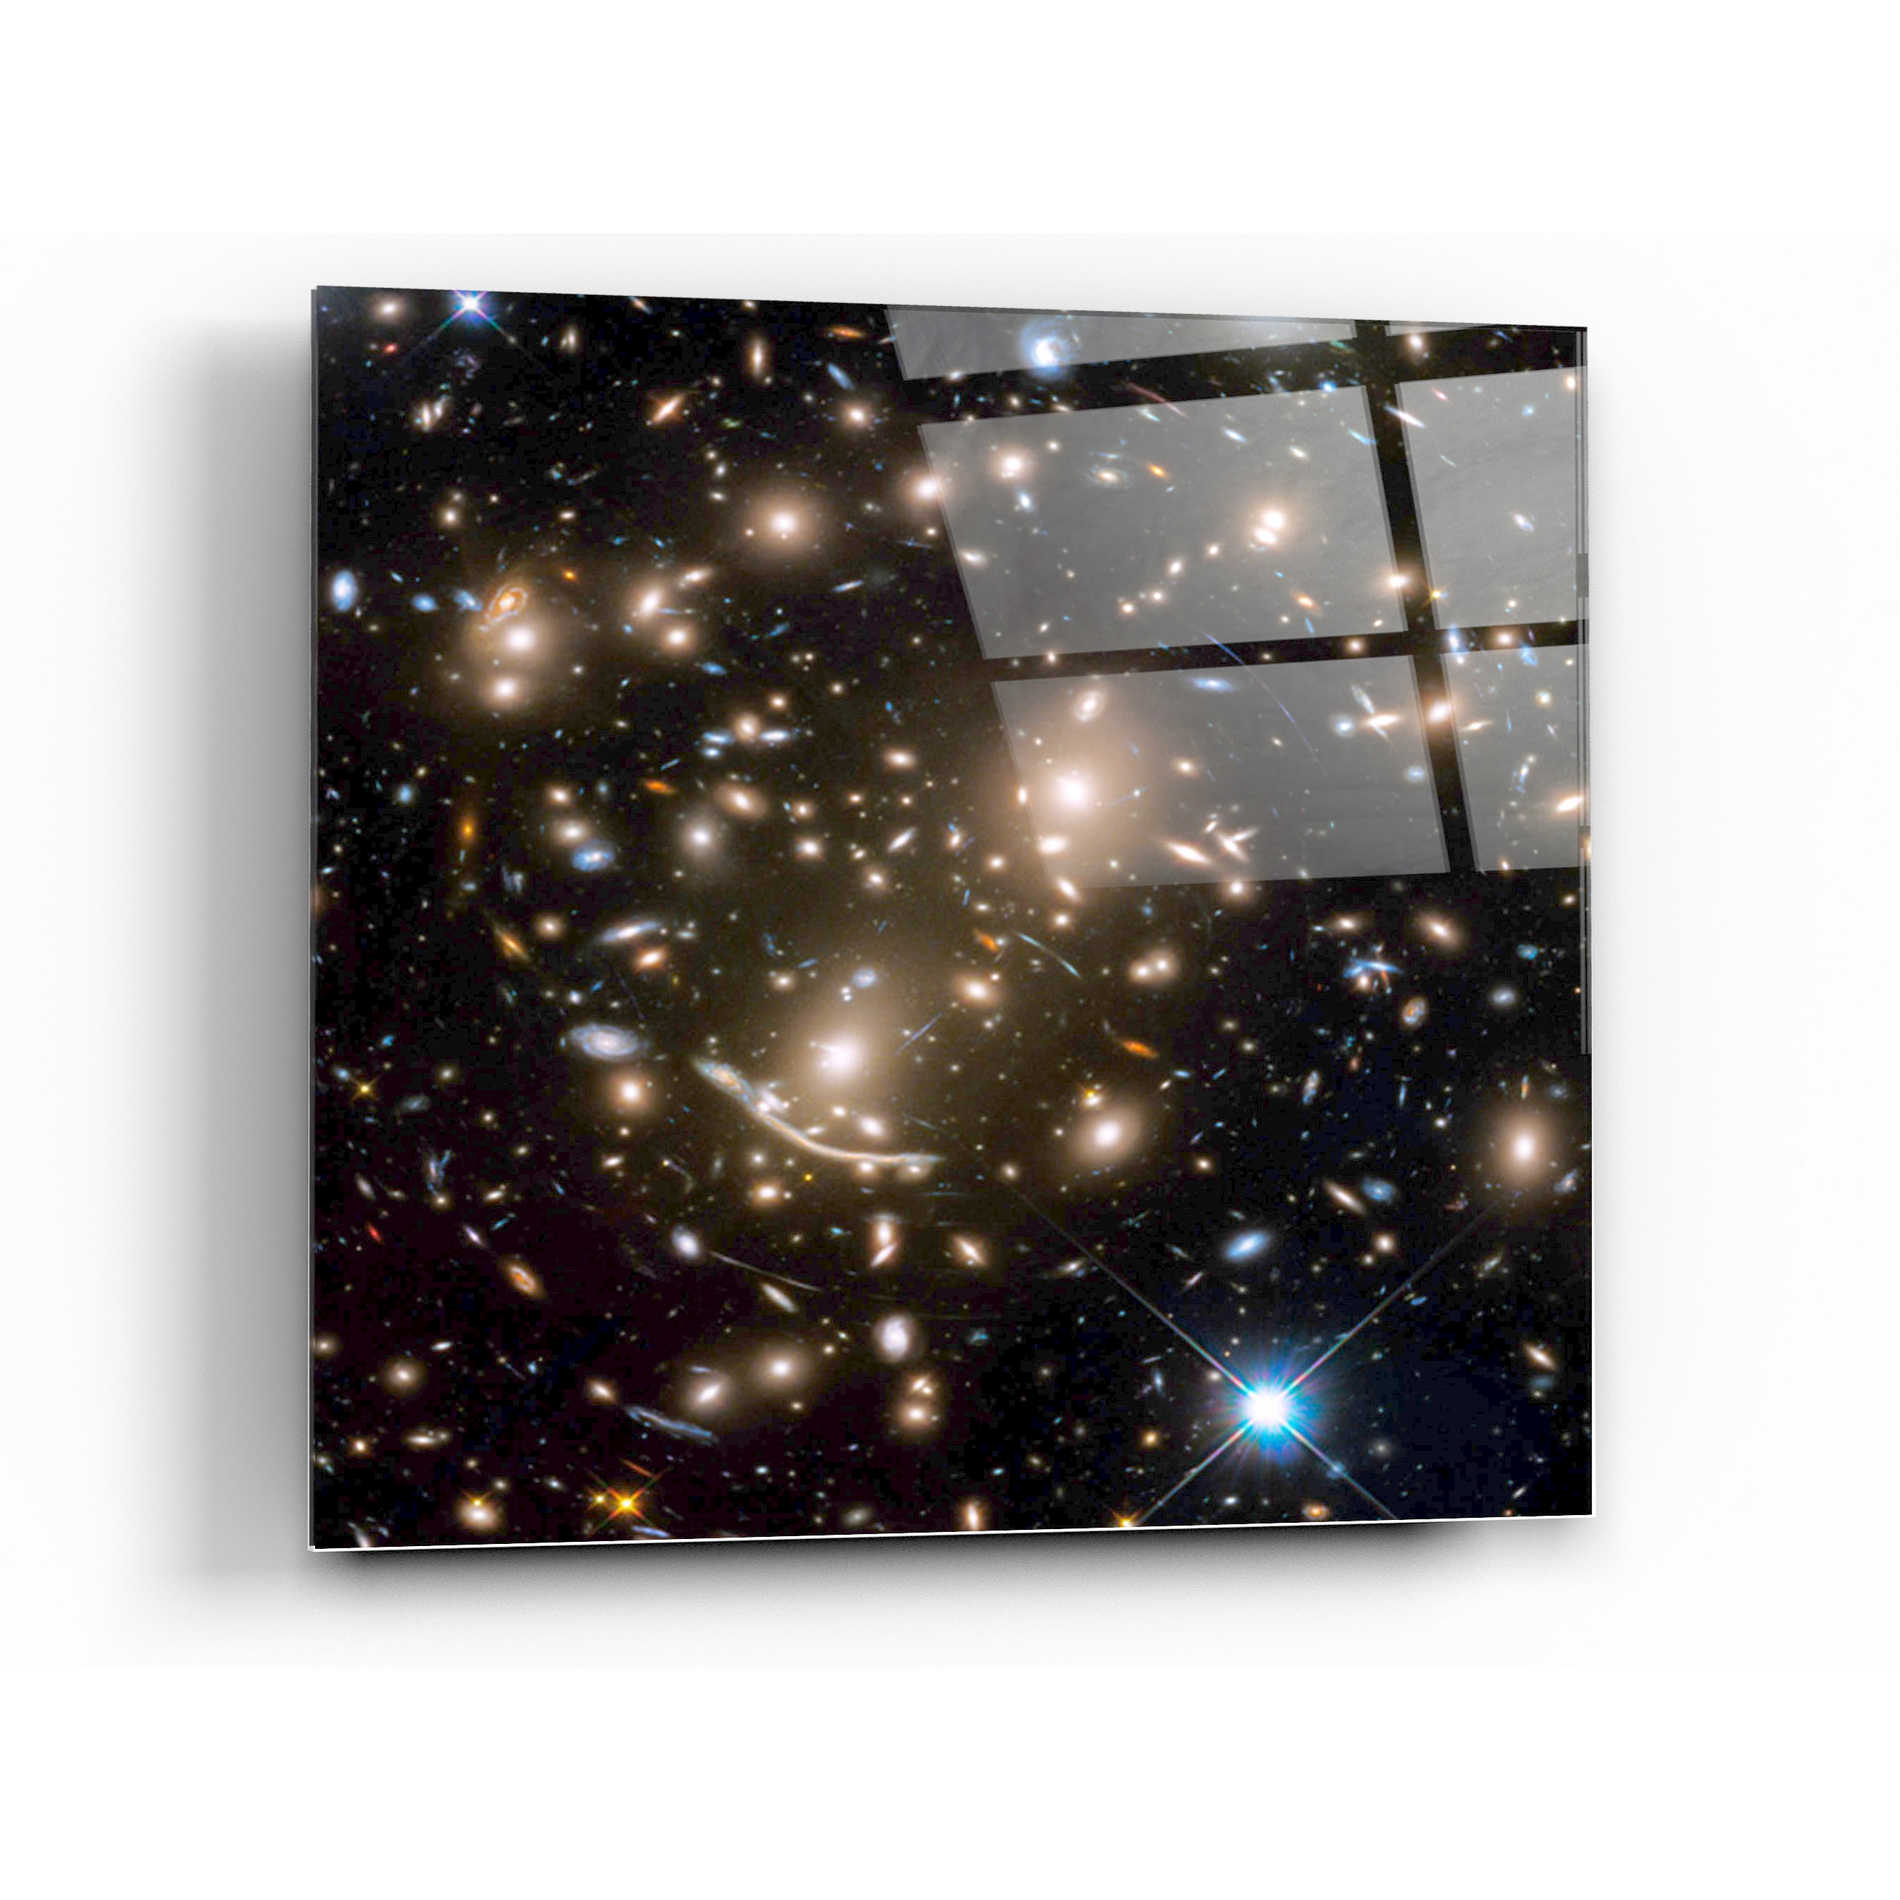 Epic Art "Abell 370" Hubble Space Telescope Acrylic Glass Wall Art,36x36